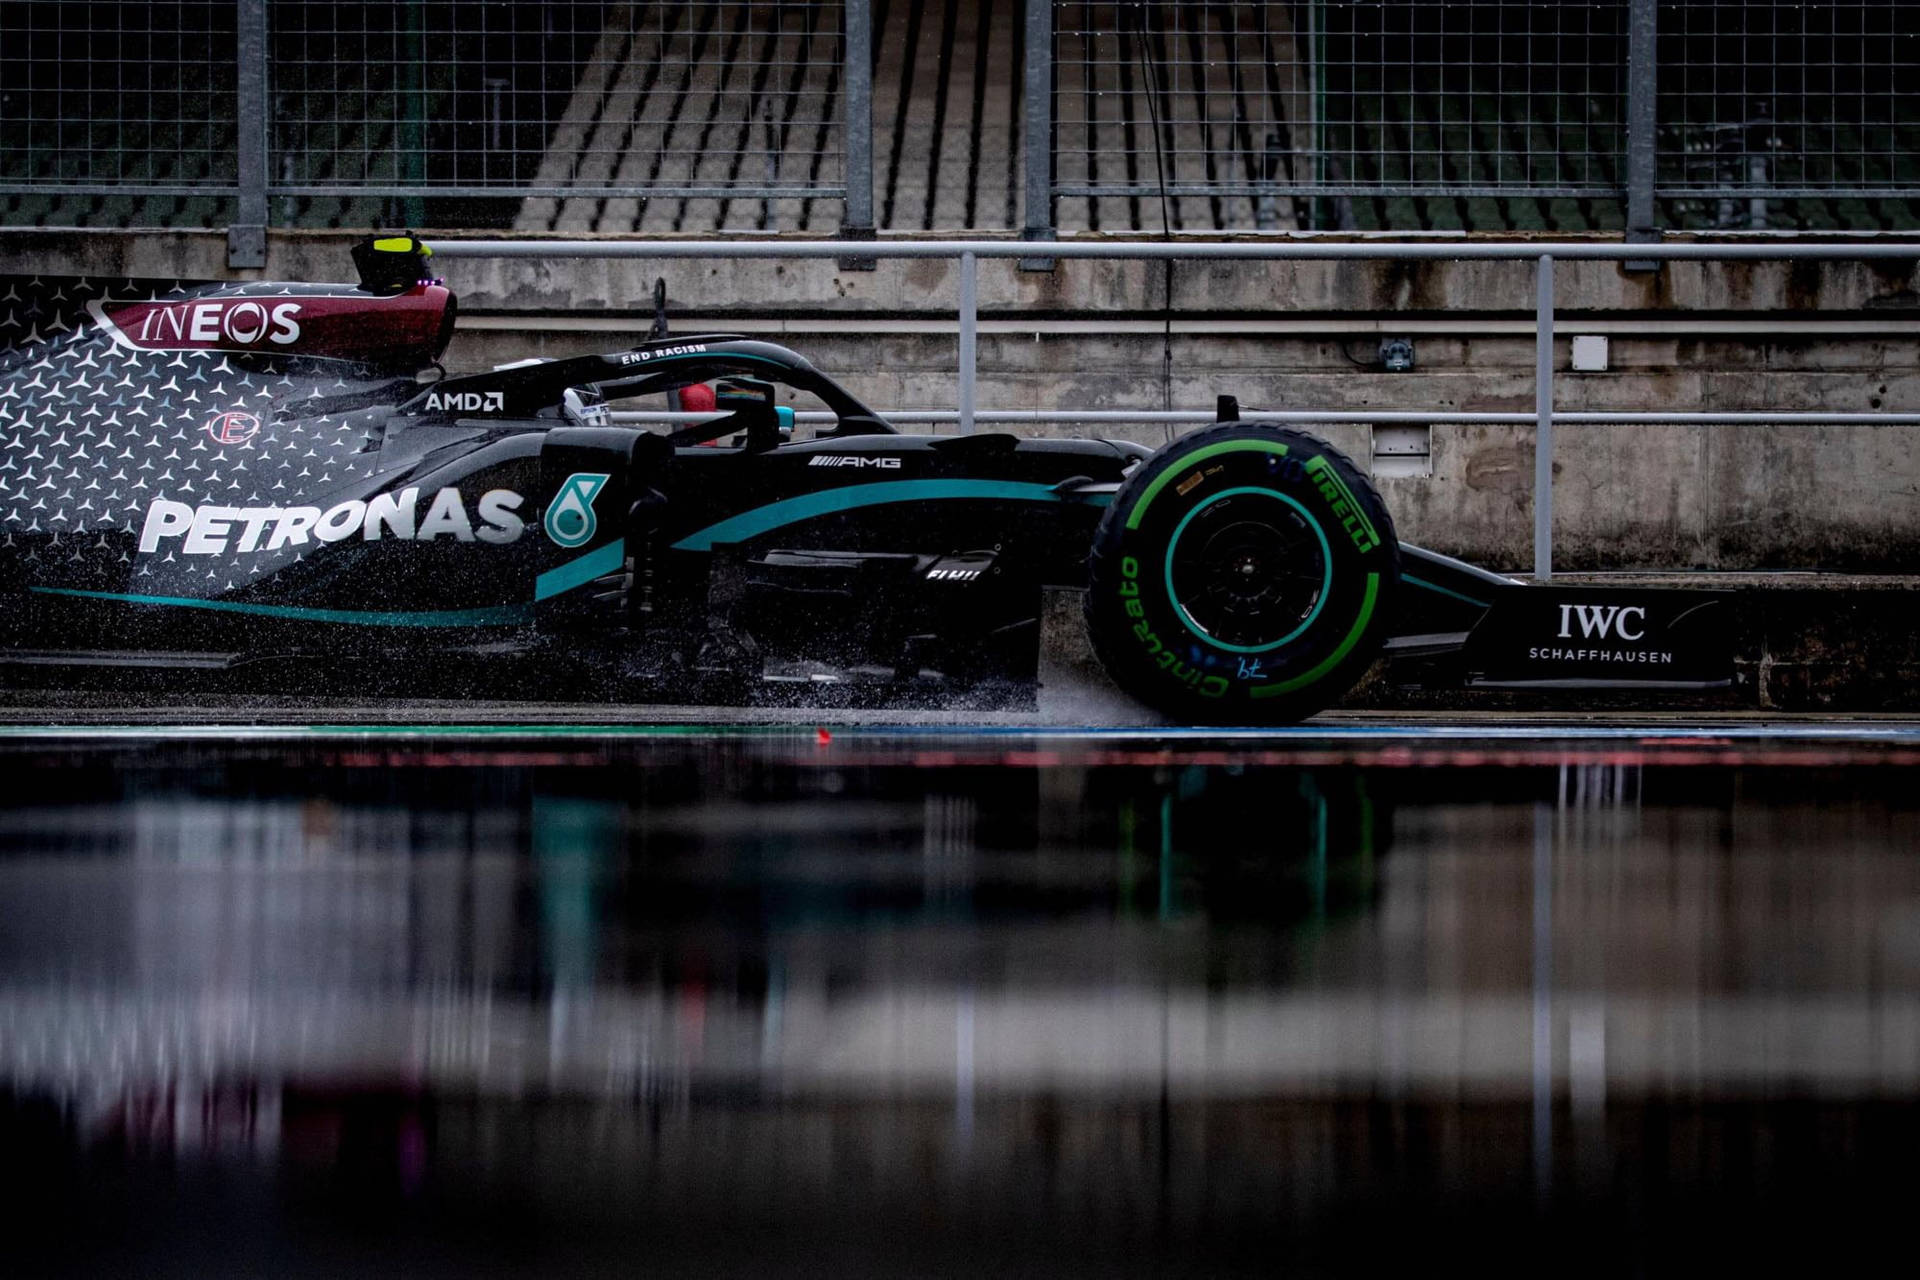 Caption: Mercedes Amg Petronas F1 Racing Car On Track